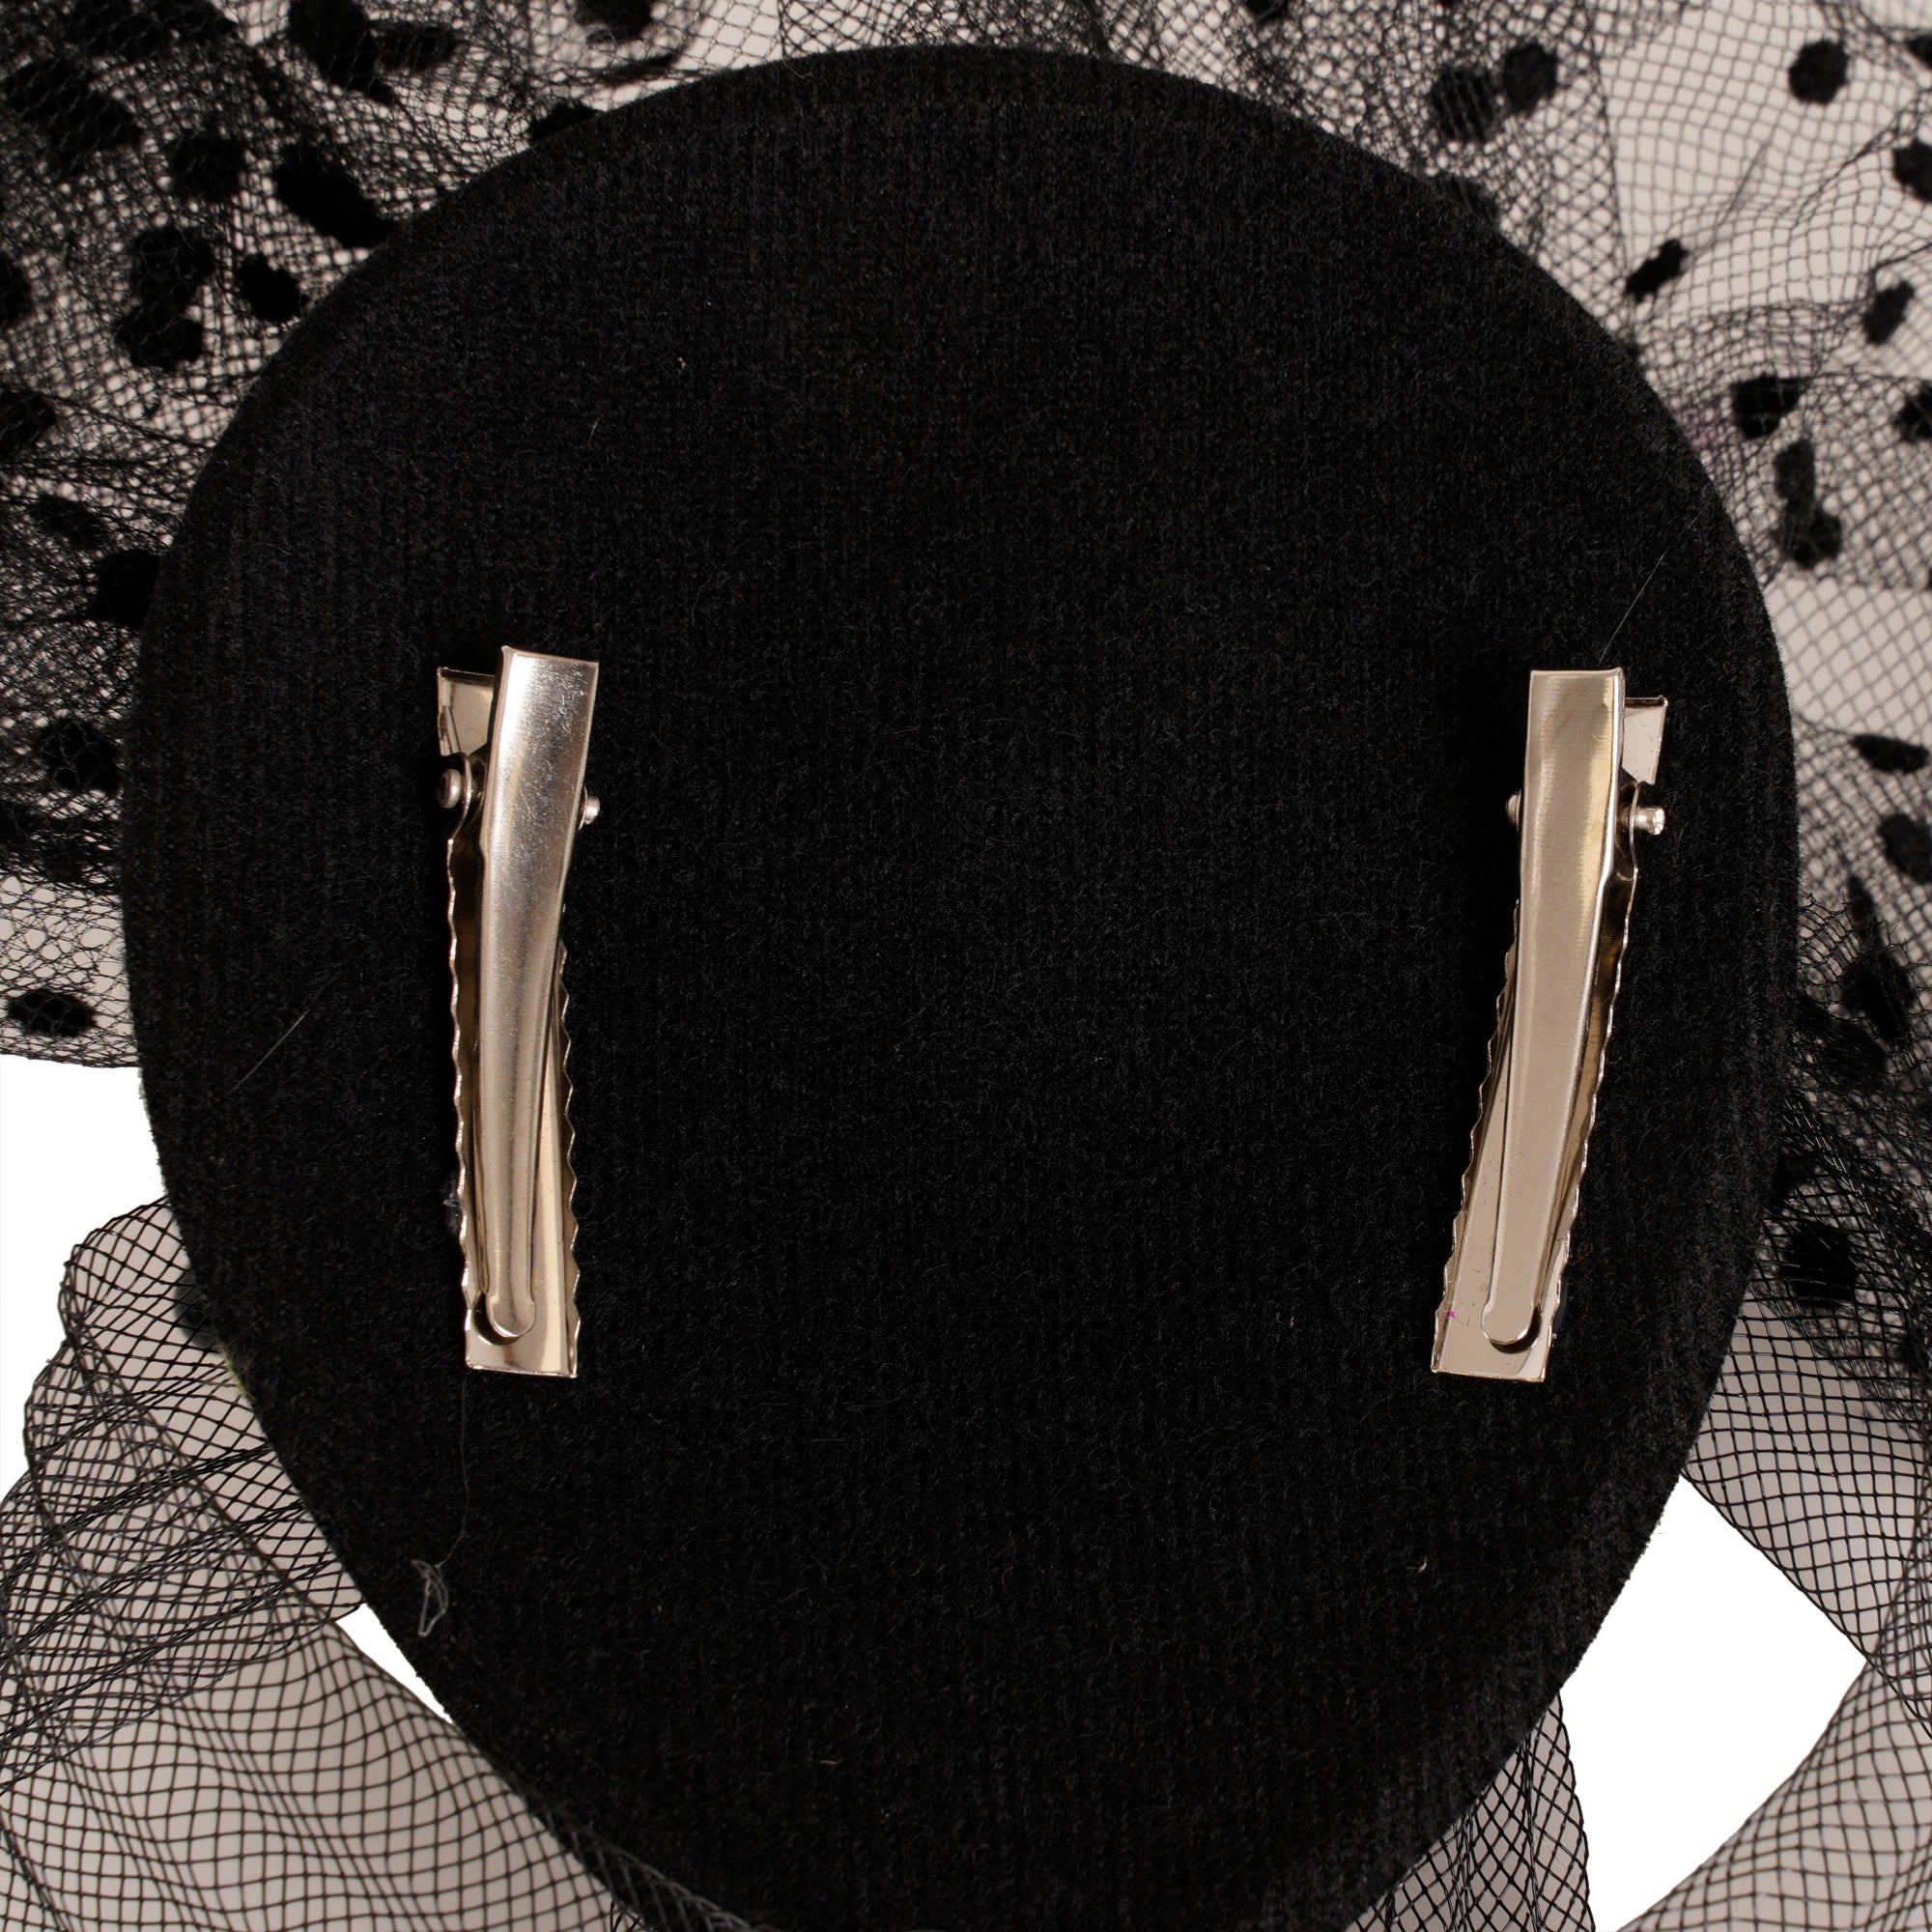 Ro Rox Retro 1940's 1950's Fascinator Net Triple Rose Hat